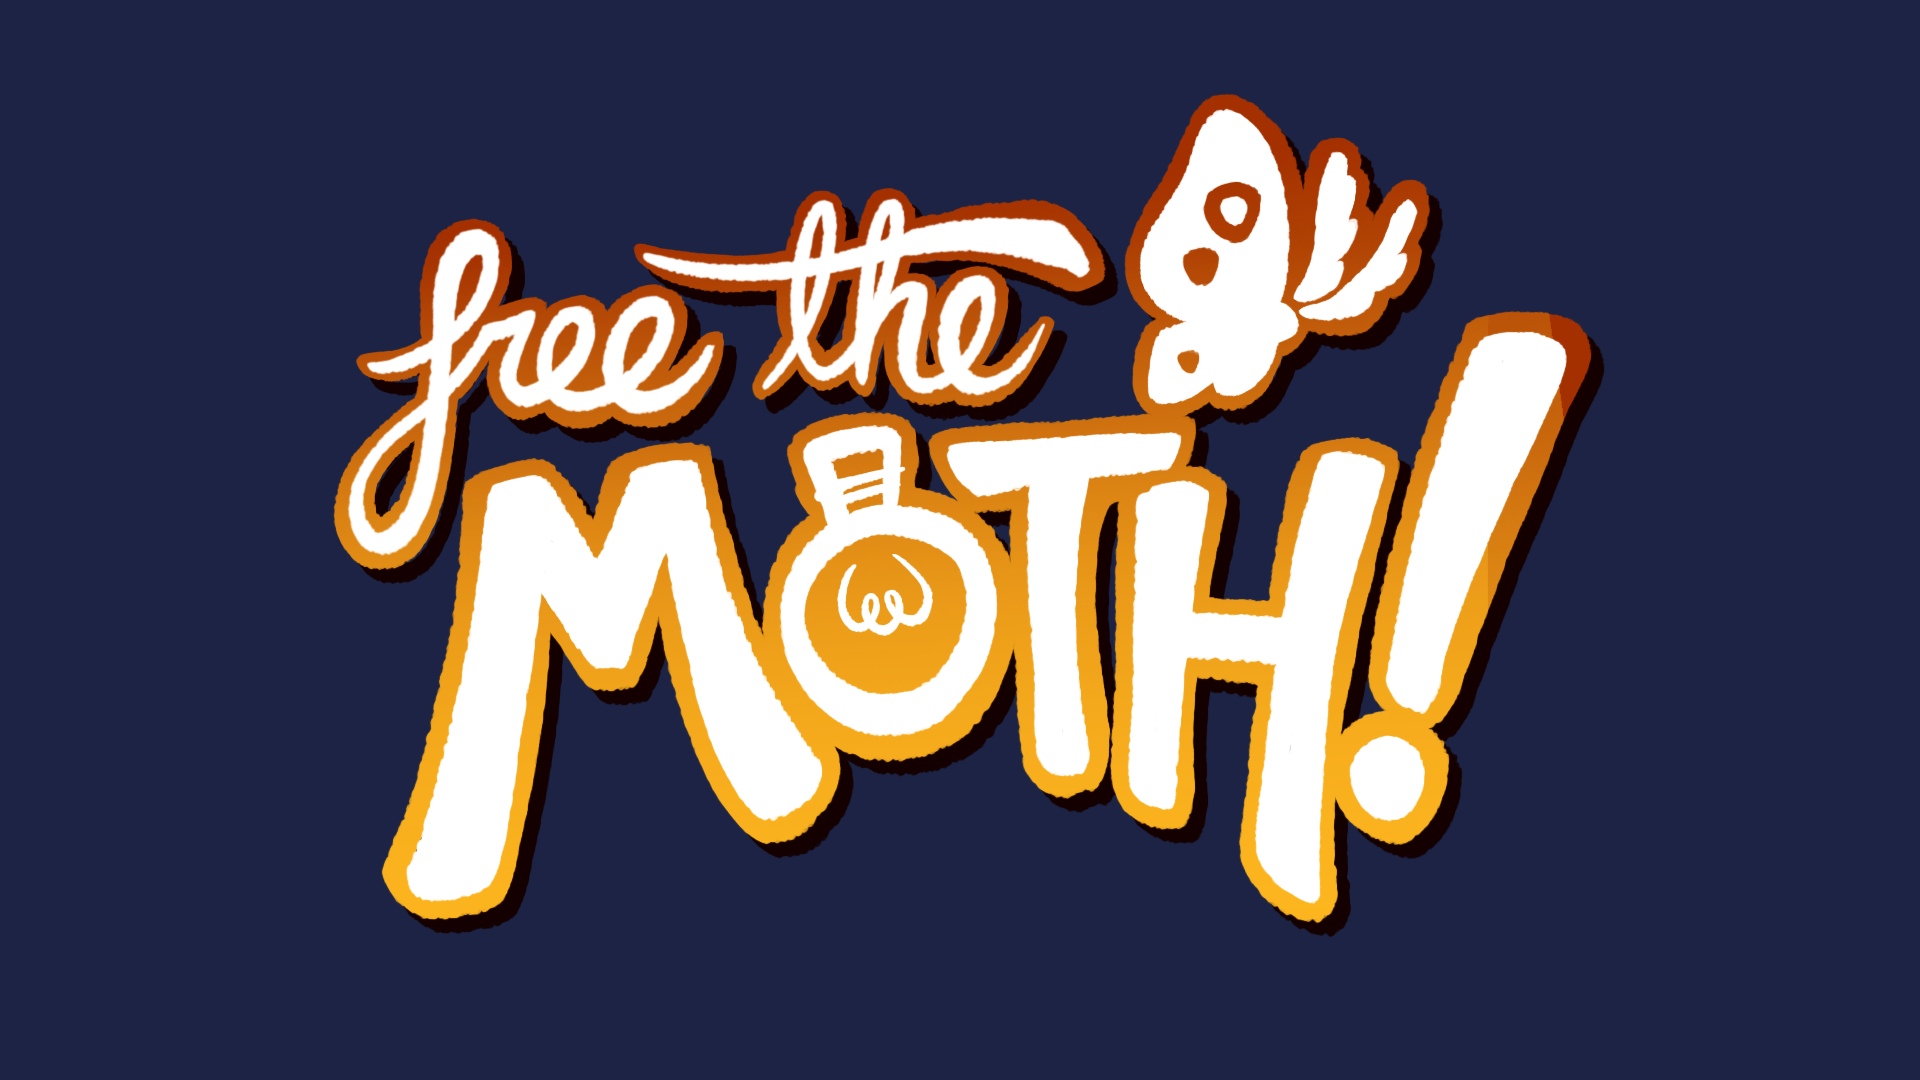 Free the Moth